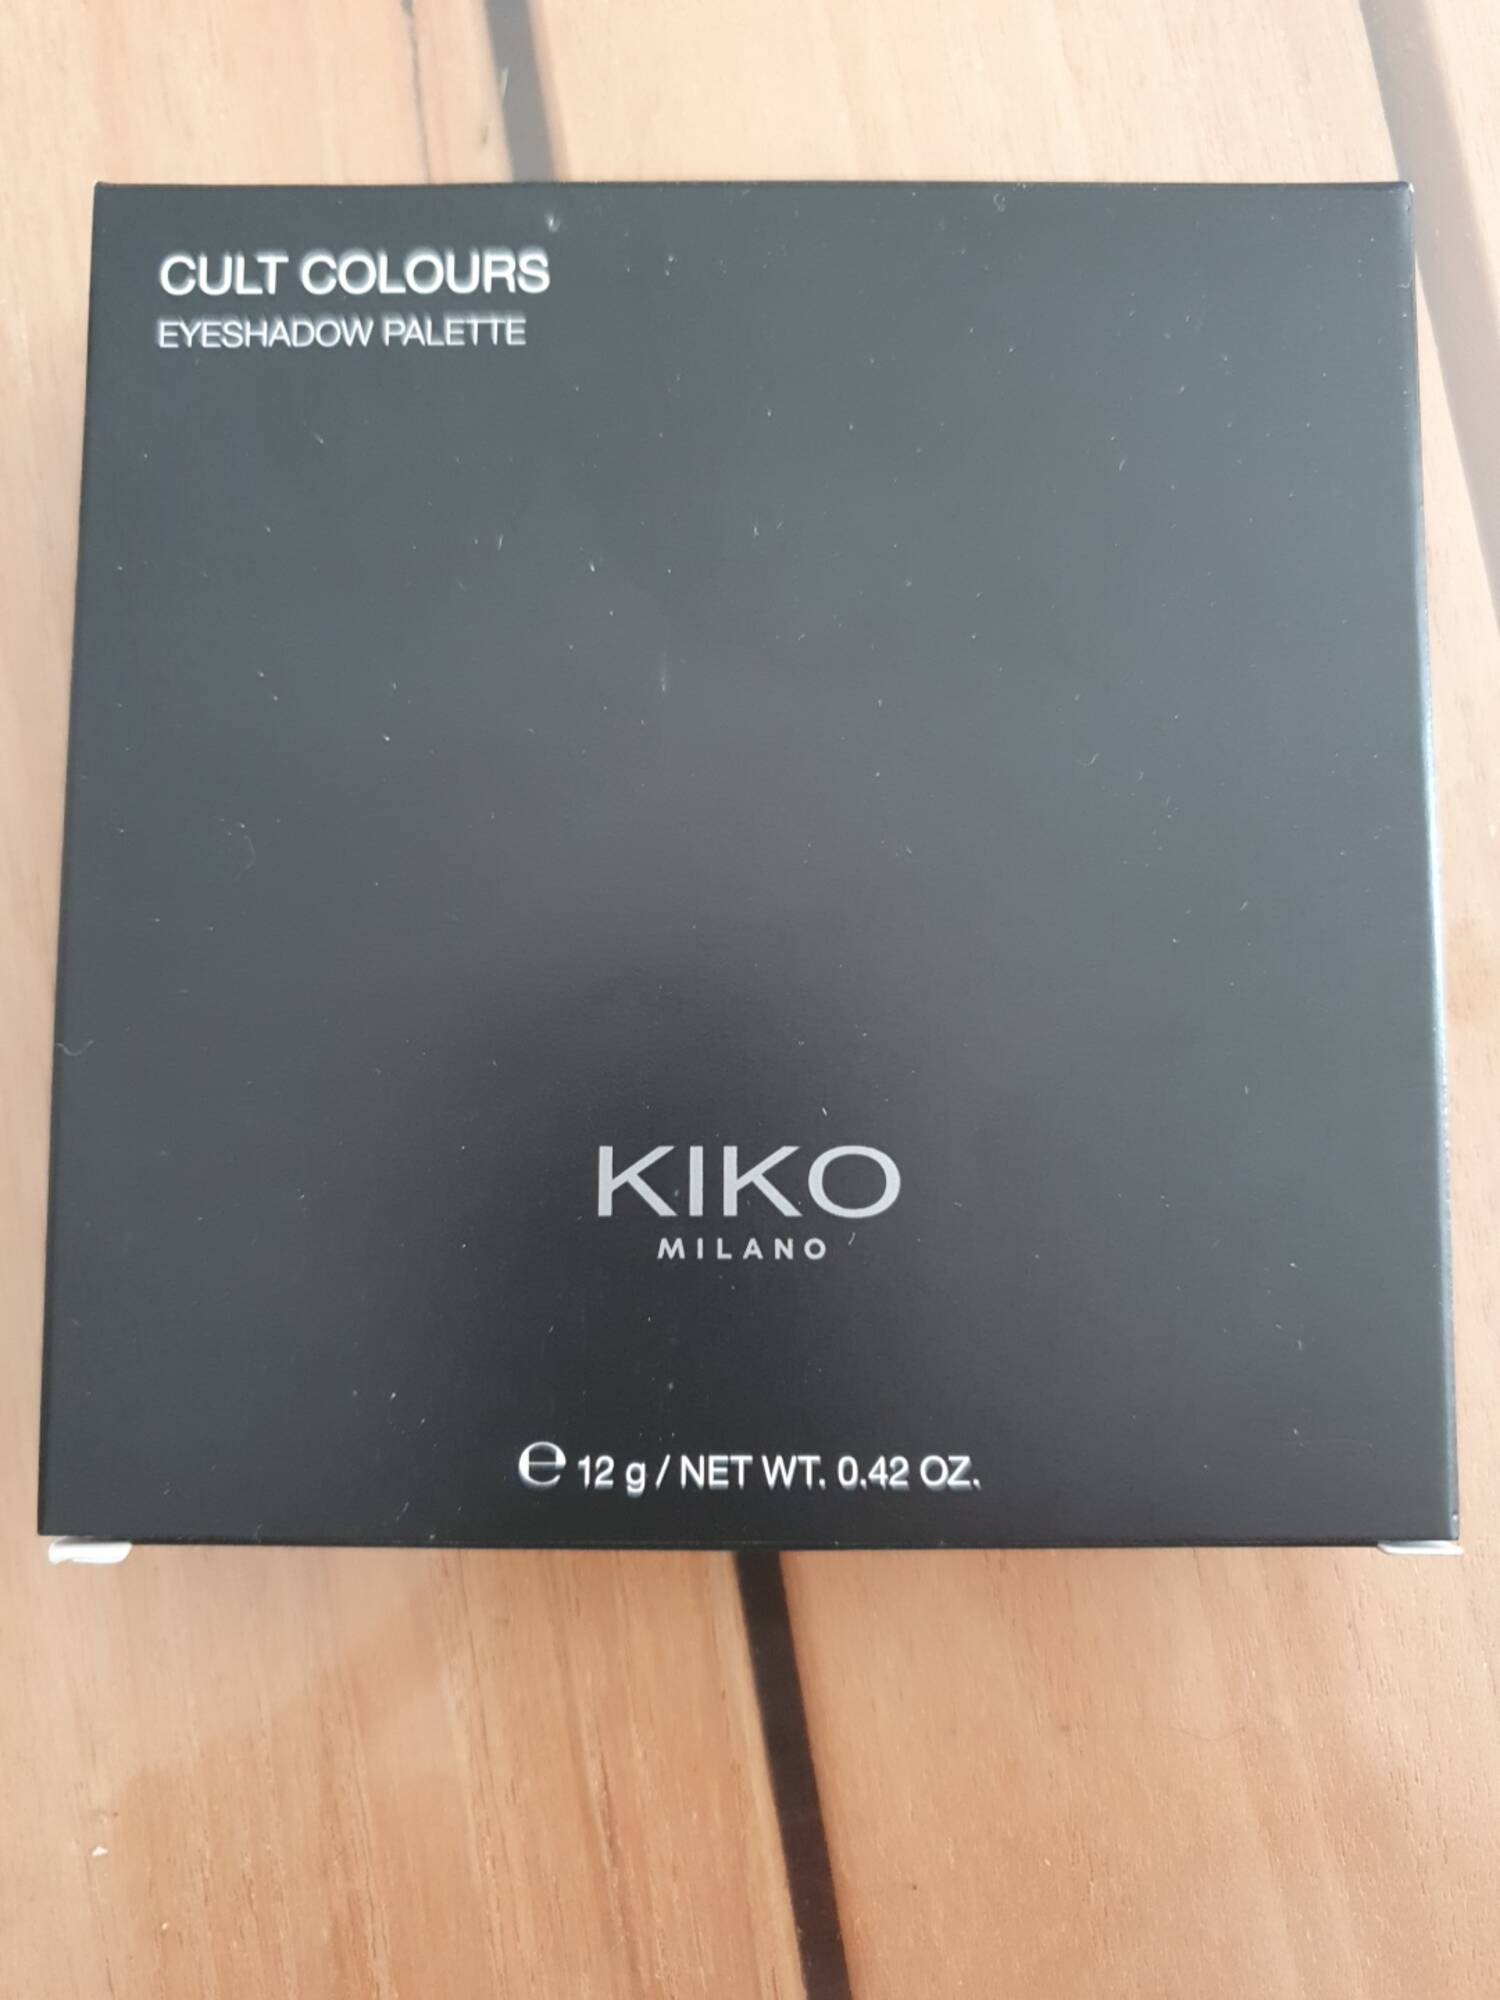 KIKO - Cult colours - Eyeshadow palette